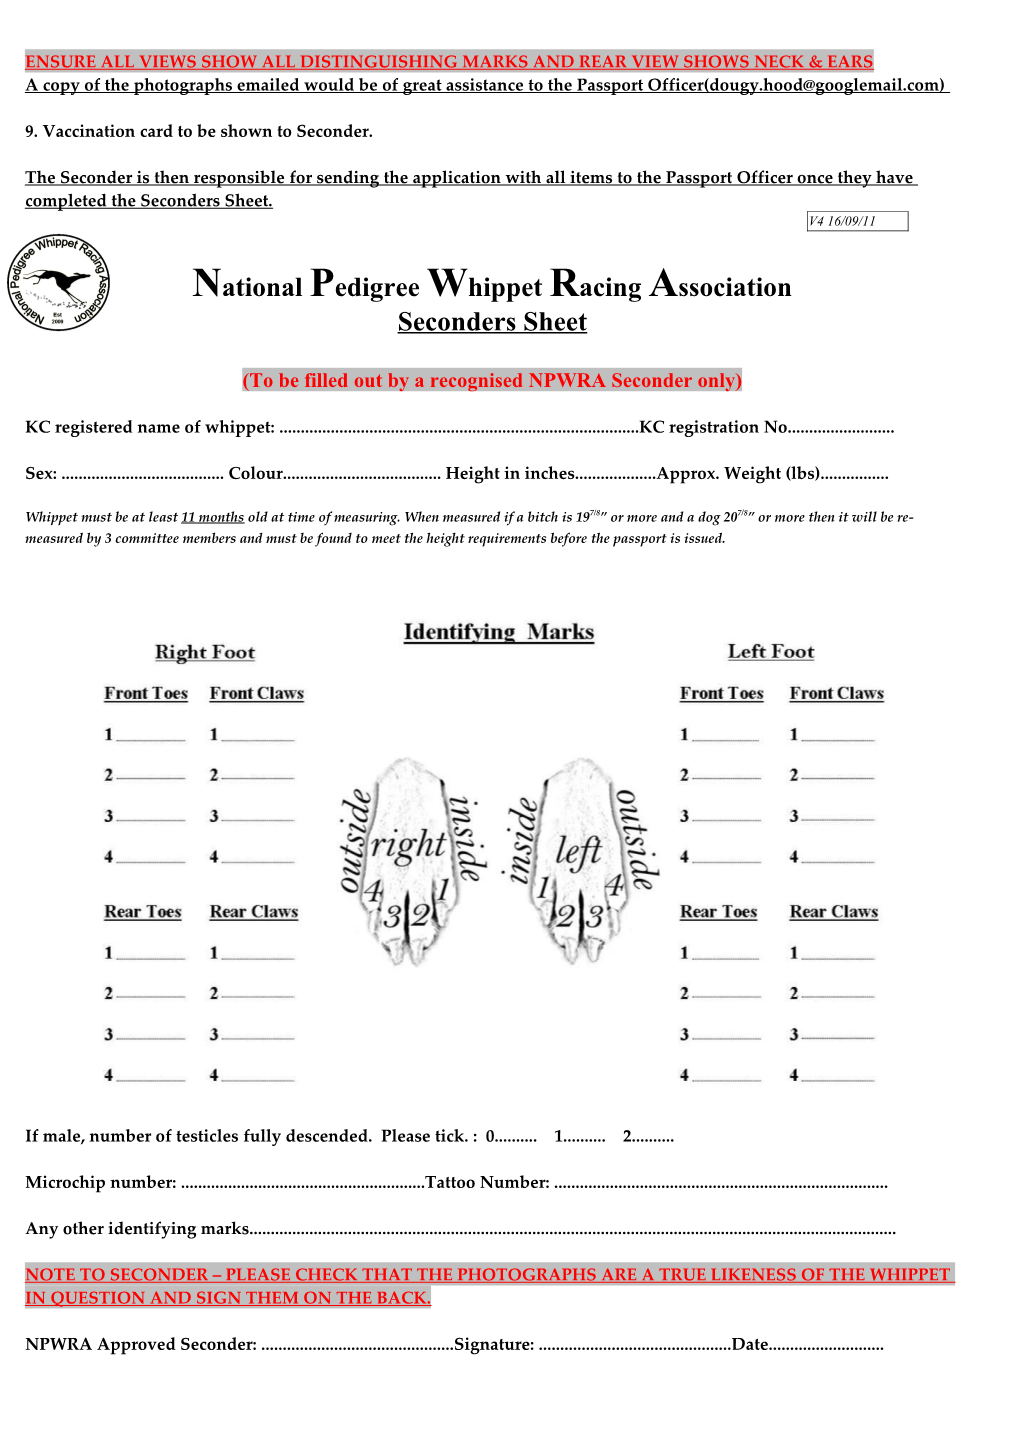 National Pedigree Whippet Racing Association